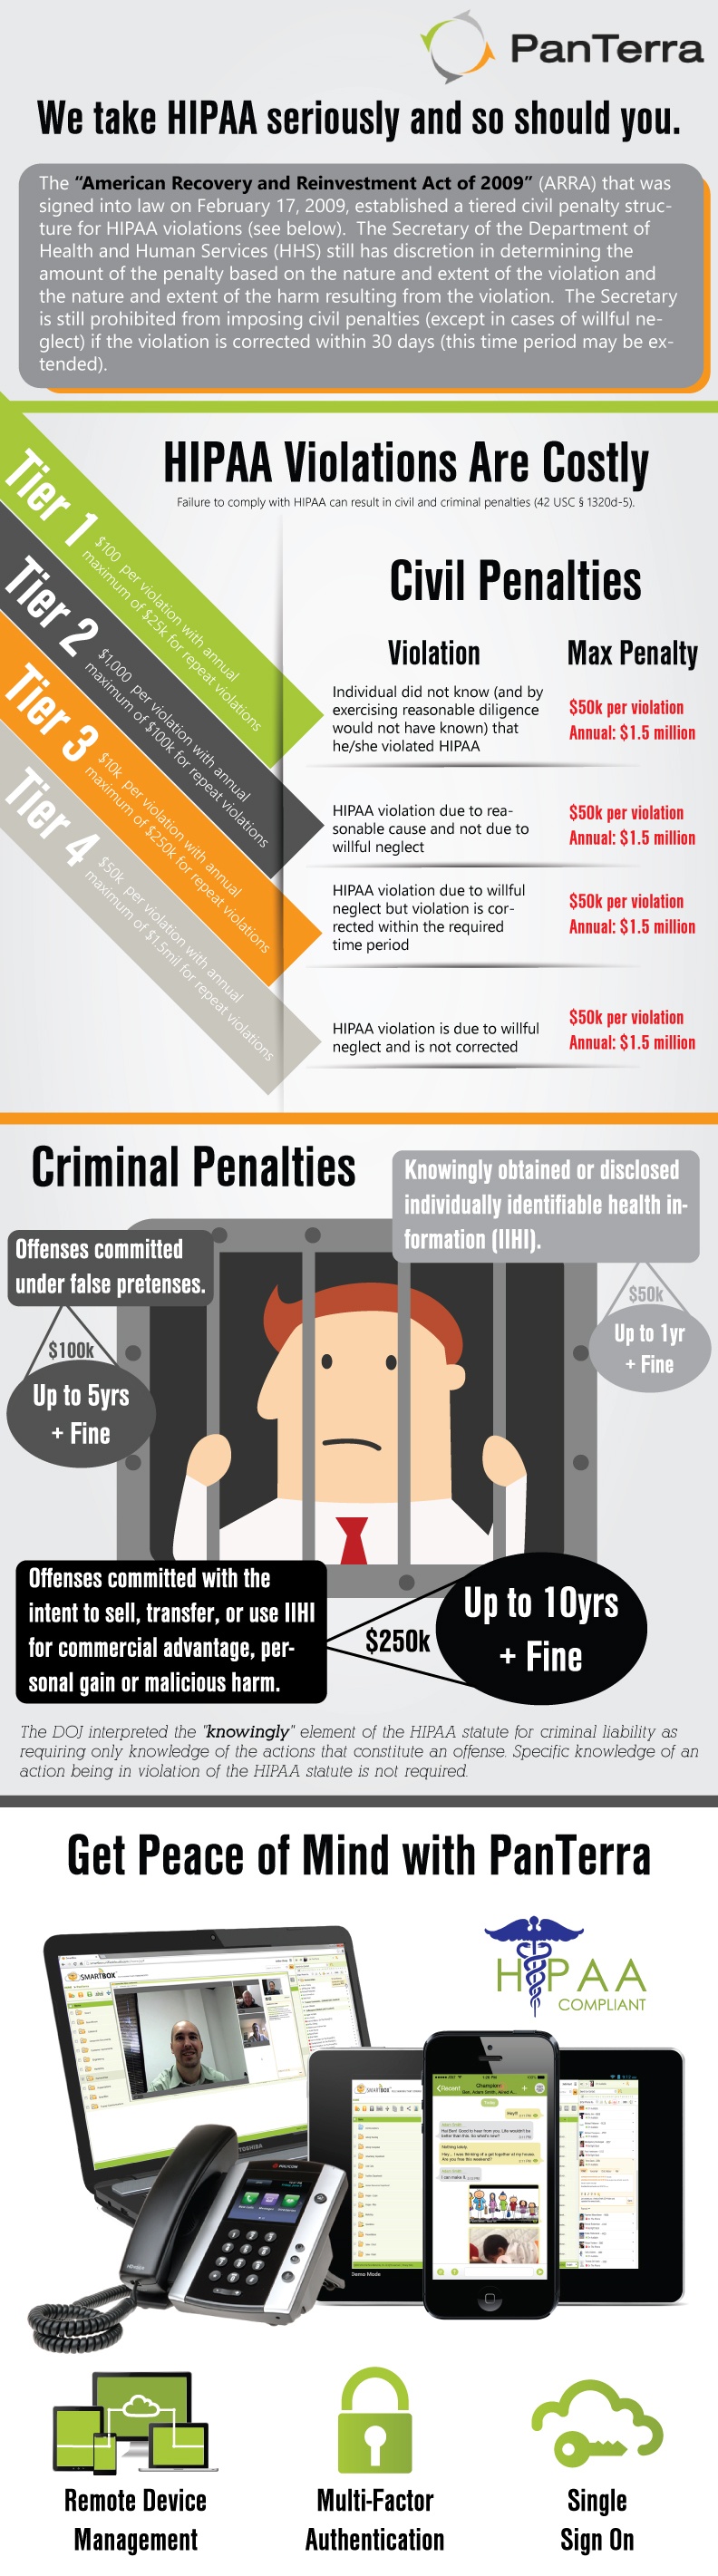 hipaa-infographic-civil-criminal-penalties-peace-of-mind.jpg